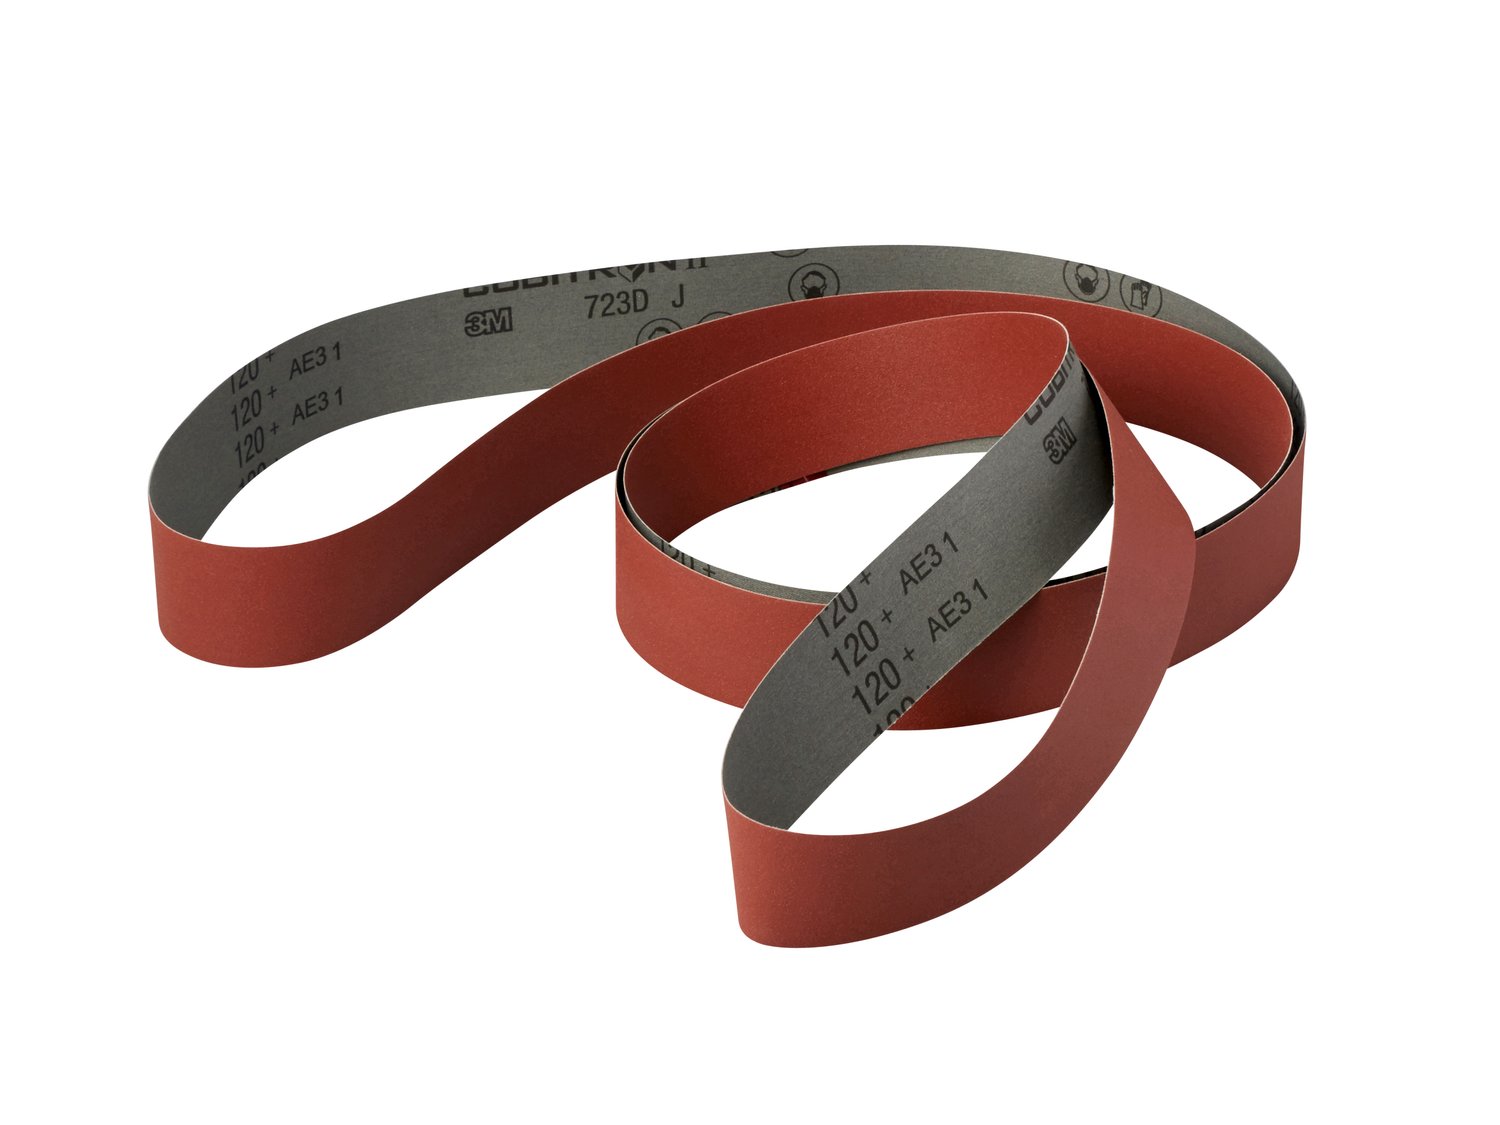 7010512554 - 3M Cubitron ll Cloth Belt 723D, 120+ J-weight, 1-1/2 in x 60 in,
Film-lok, Full-flex